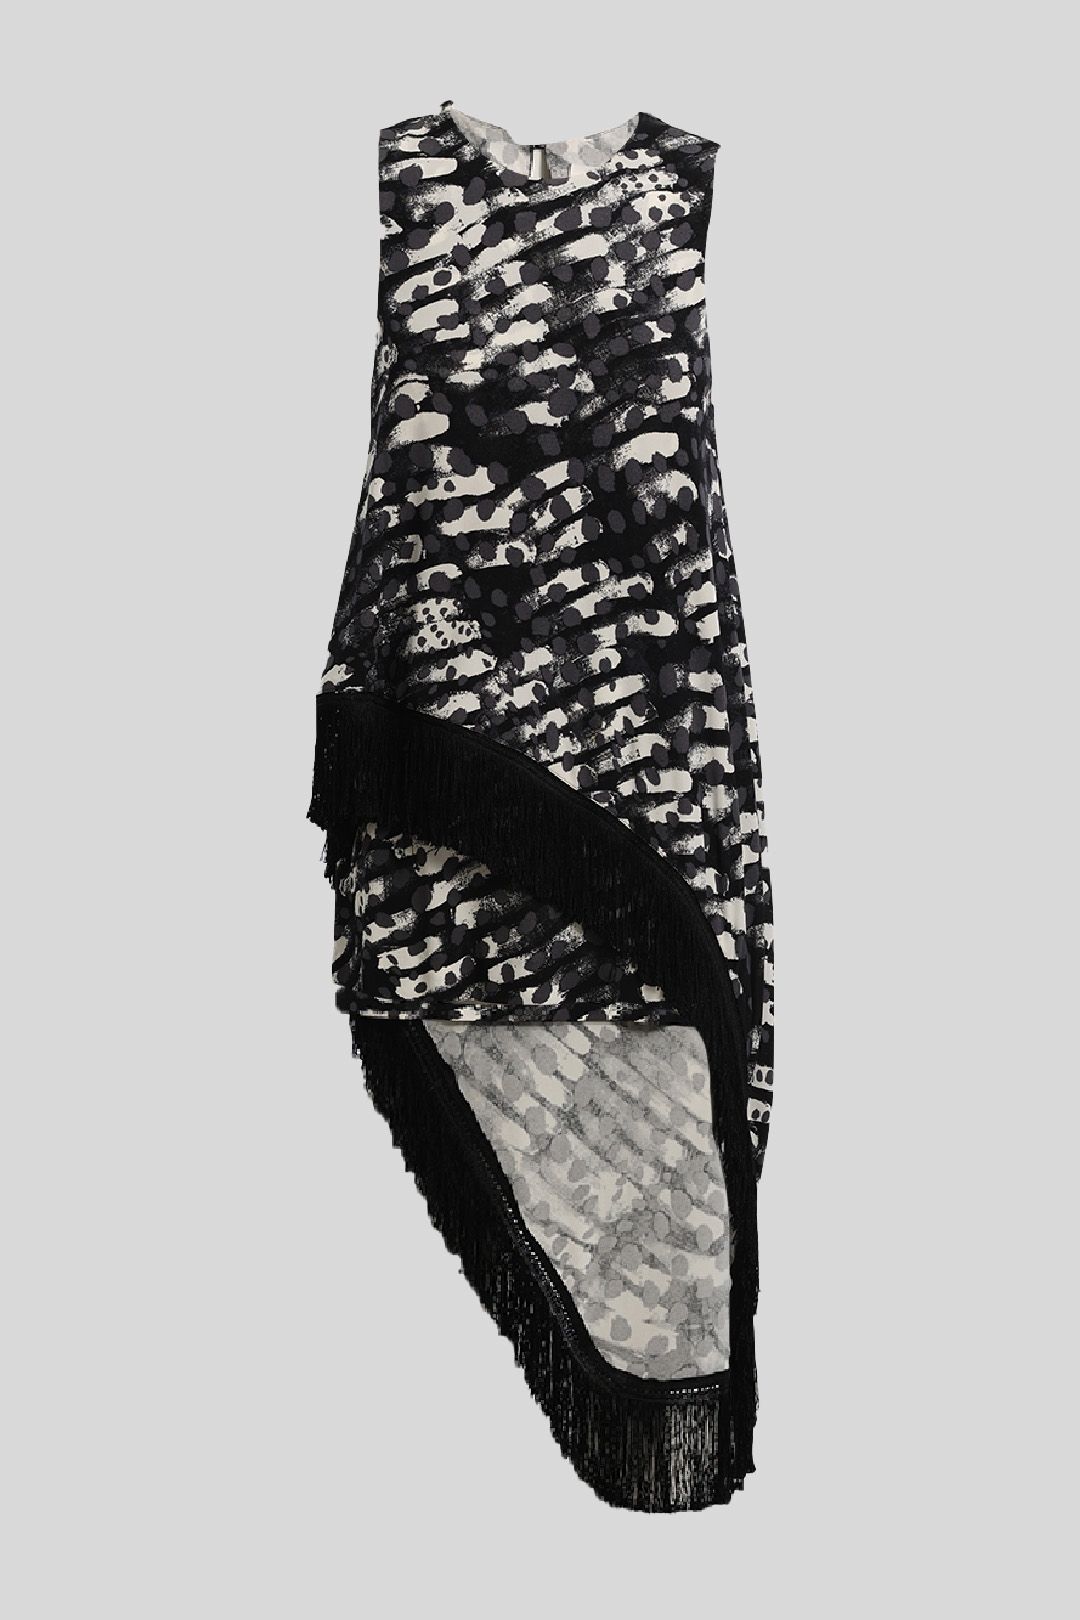 Sass and Bide - Black and White Printed Fringe Dress